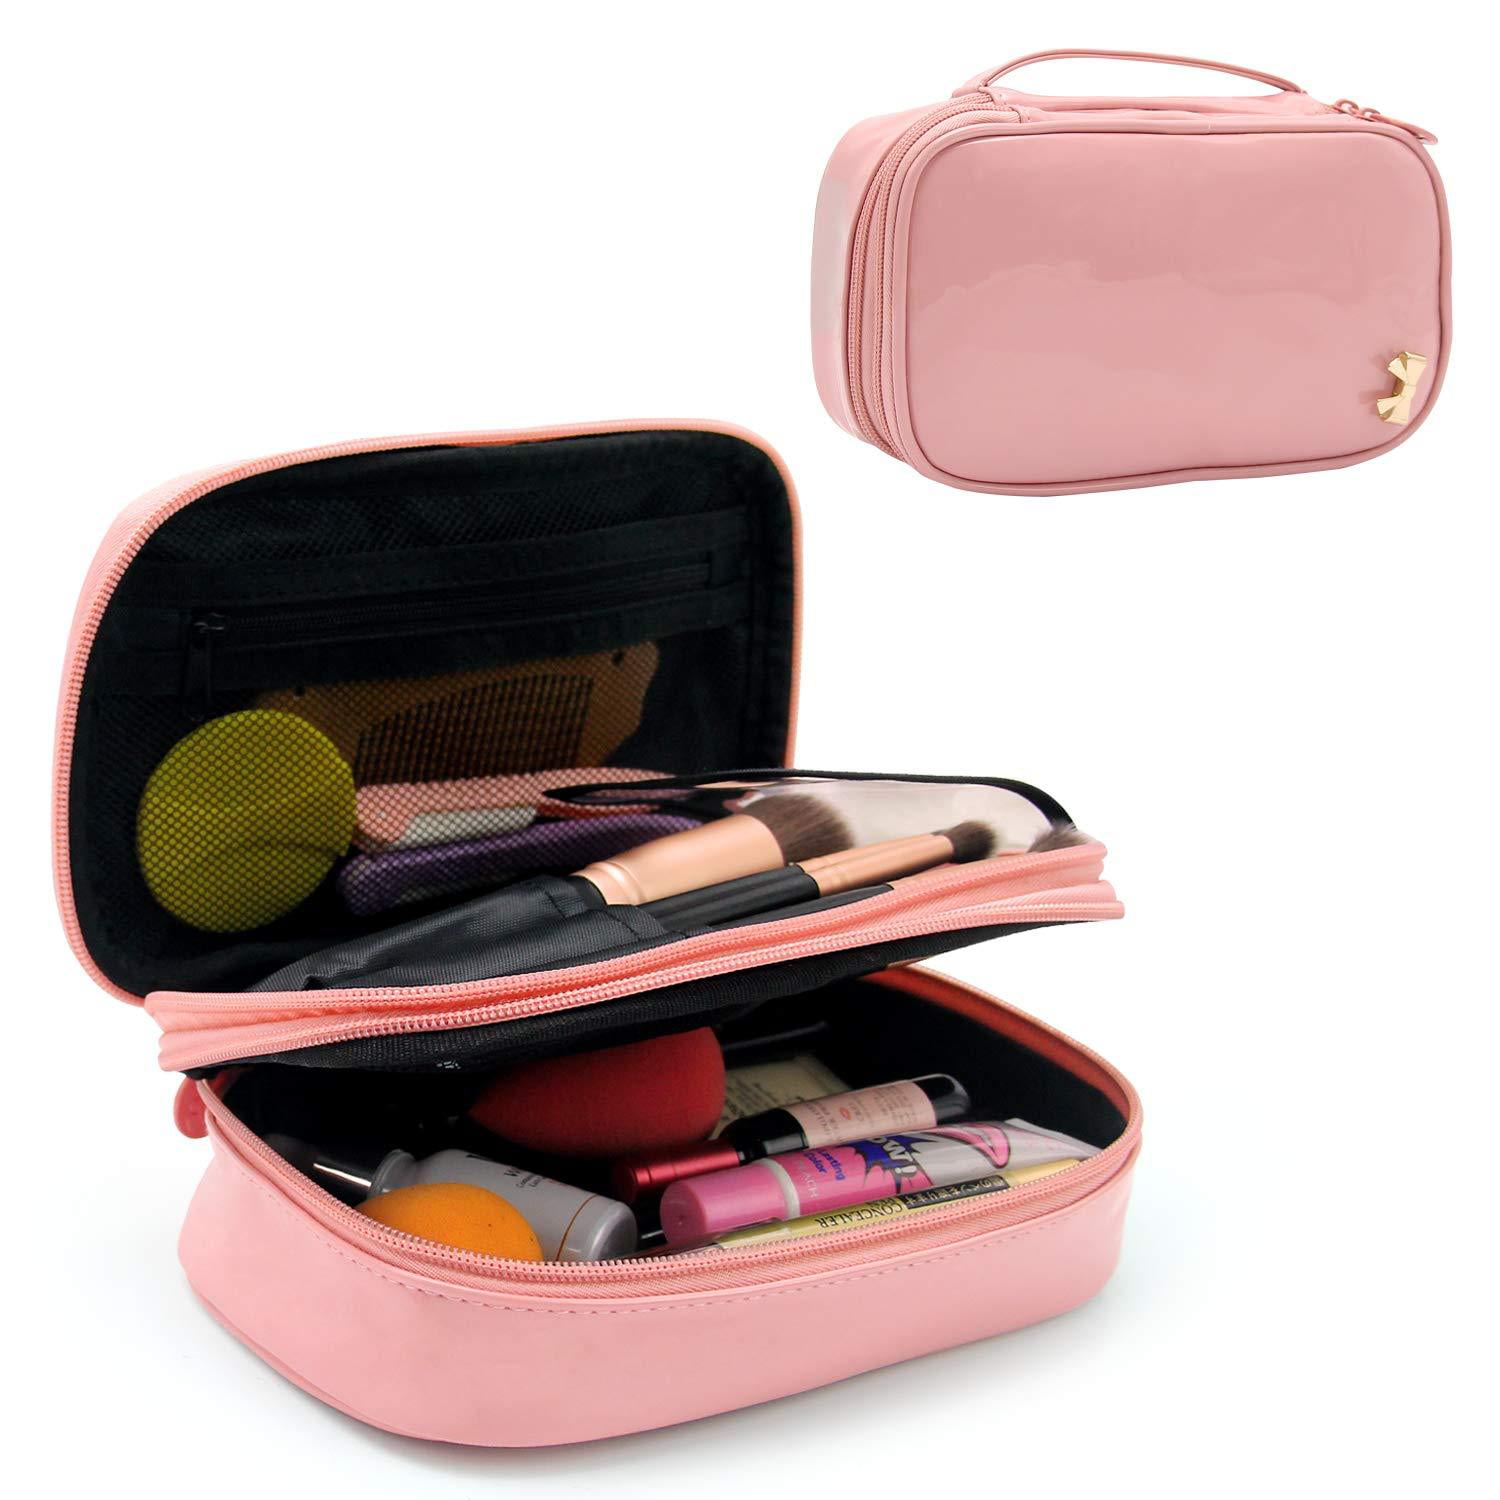 Relavel Makeup Bag Small Travel Cosmetic Bag for Women Girls Makeup ...